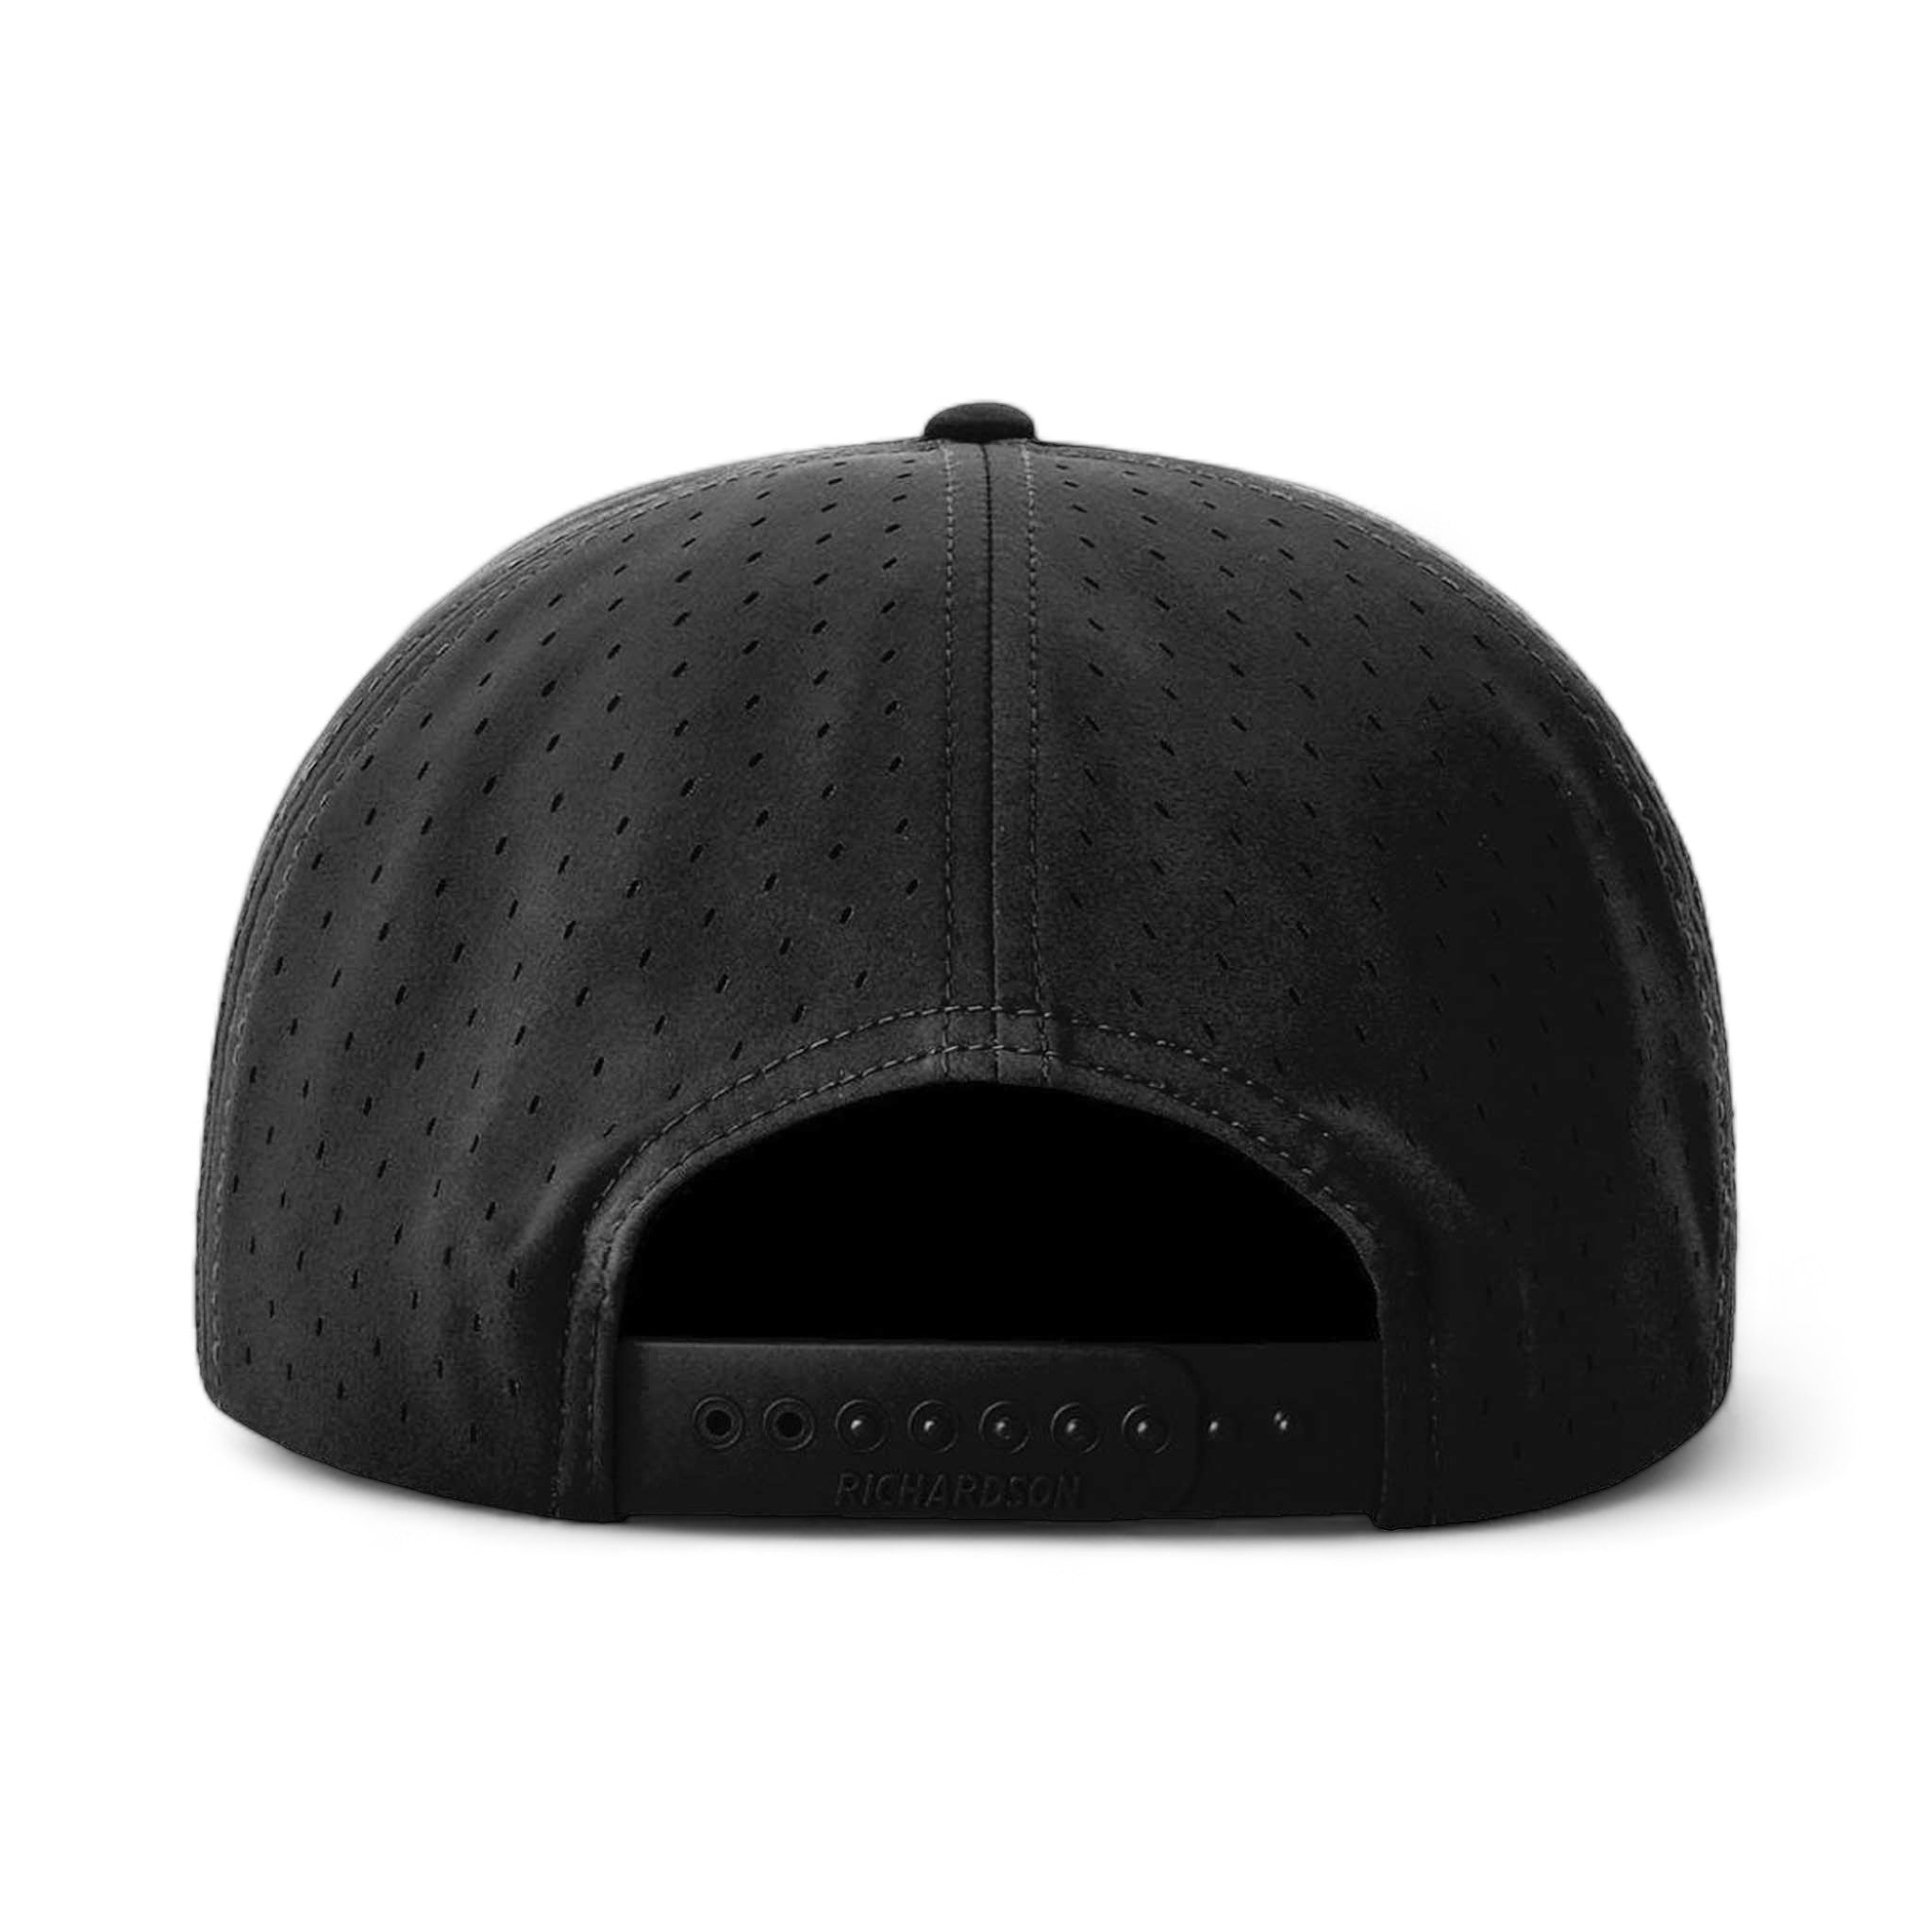 Back view of Richardson 169 custom hat in black